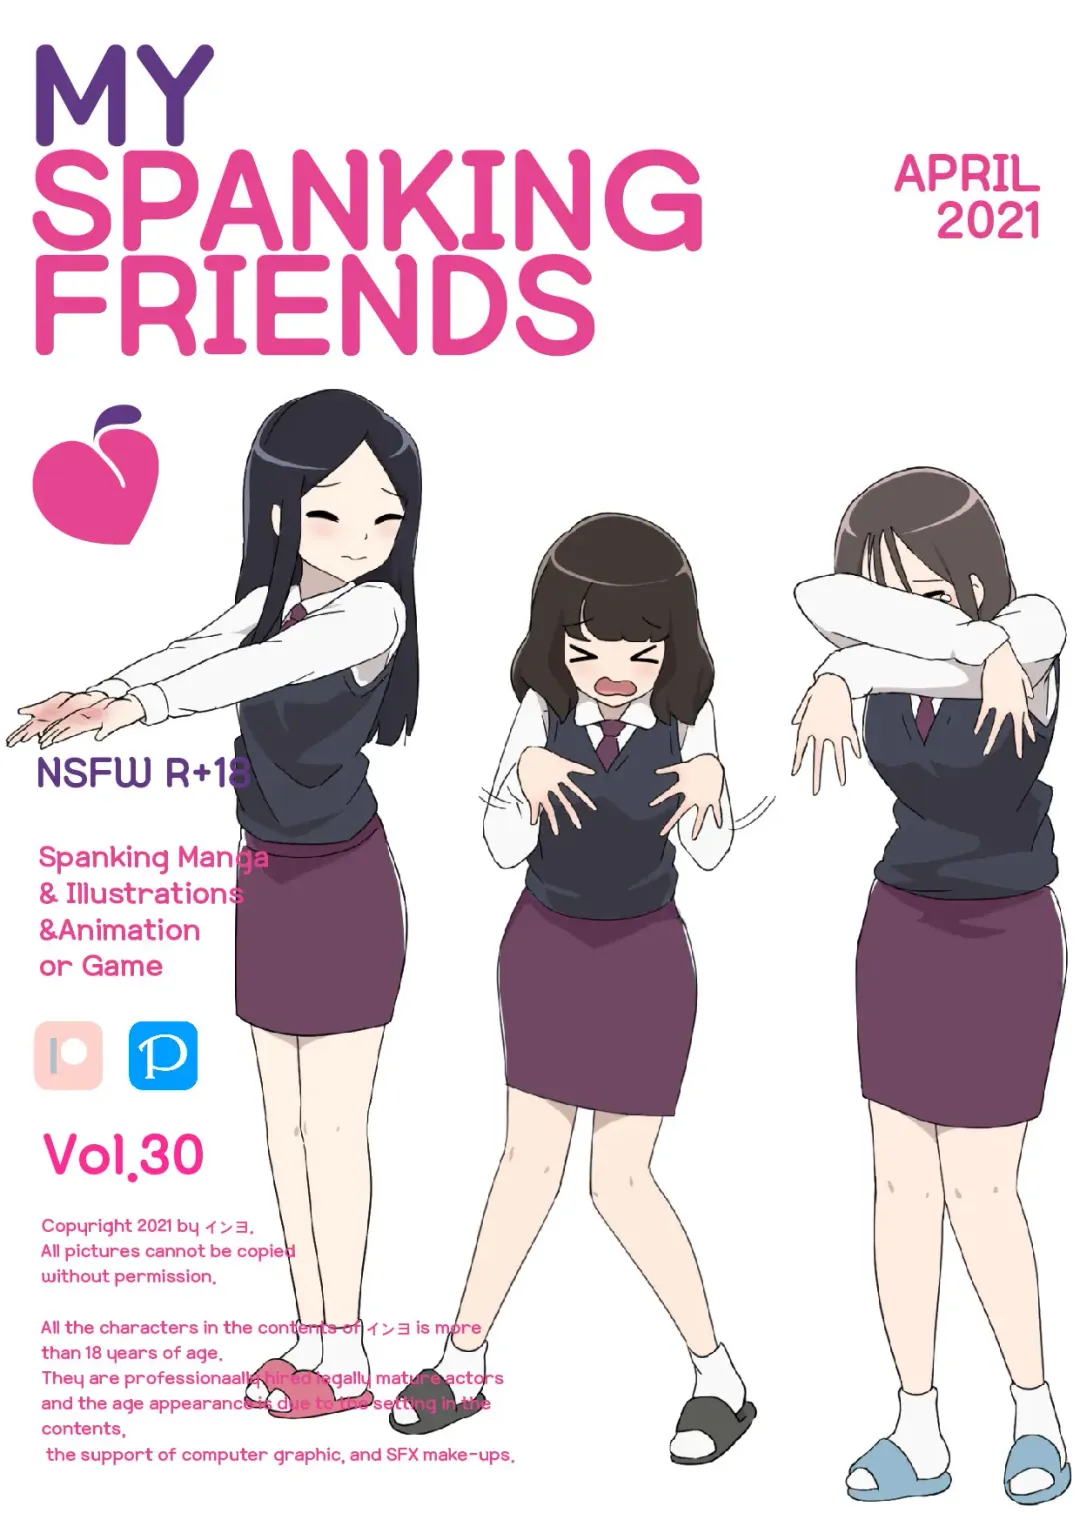 Read [Eingyeo] My Spanking Friends Vol. 30 - Fhentai.net